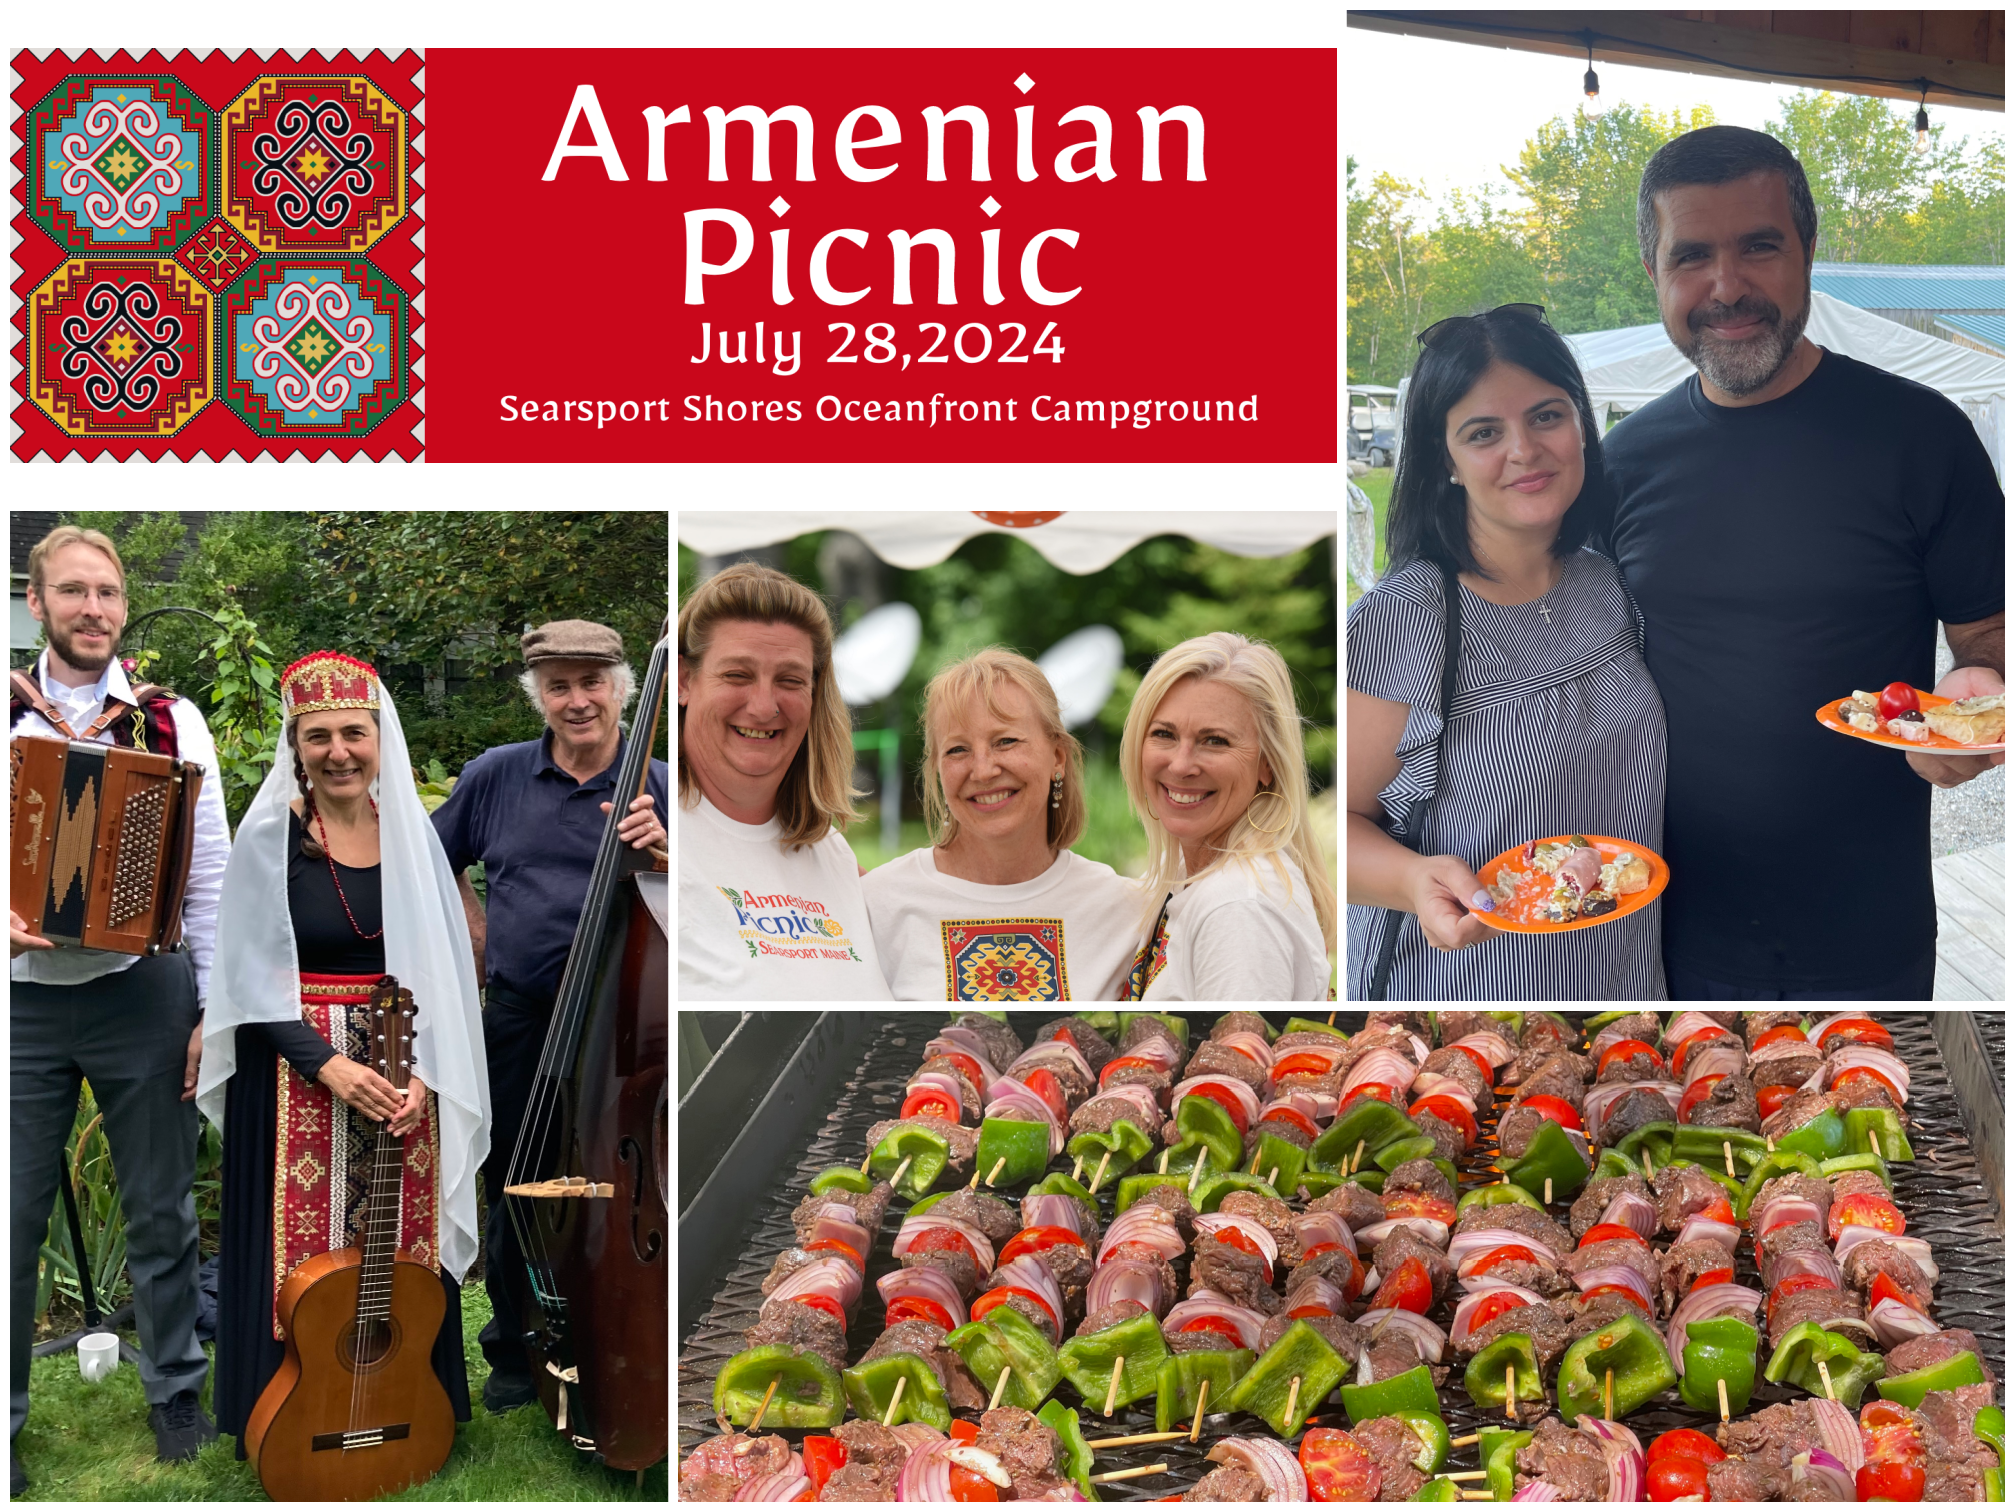 Armenian Picnic 2024…a magic carpet ride for the whole family!